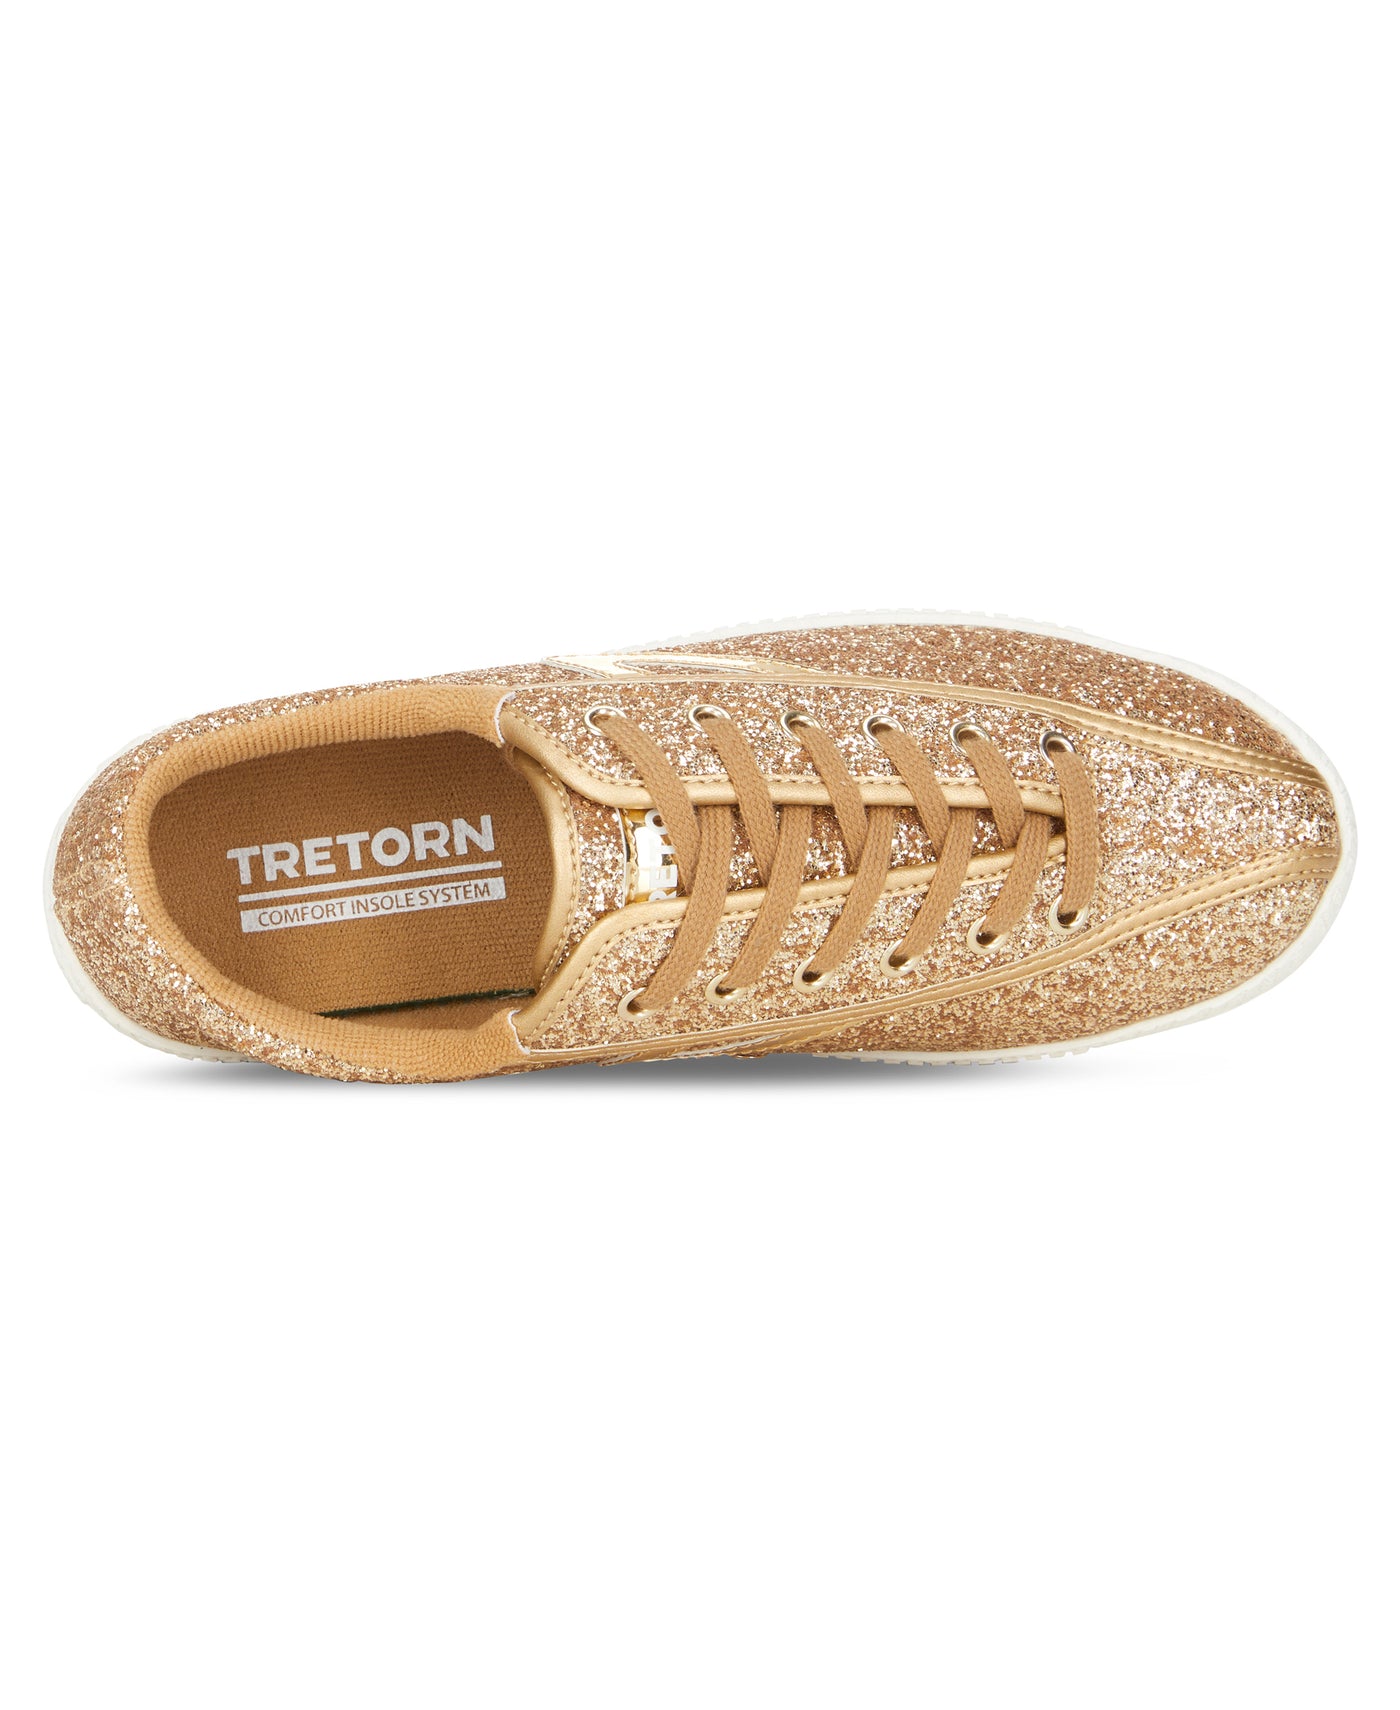 Tretorn Women's Sneakers Nylite Glitter Gold